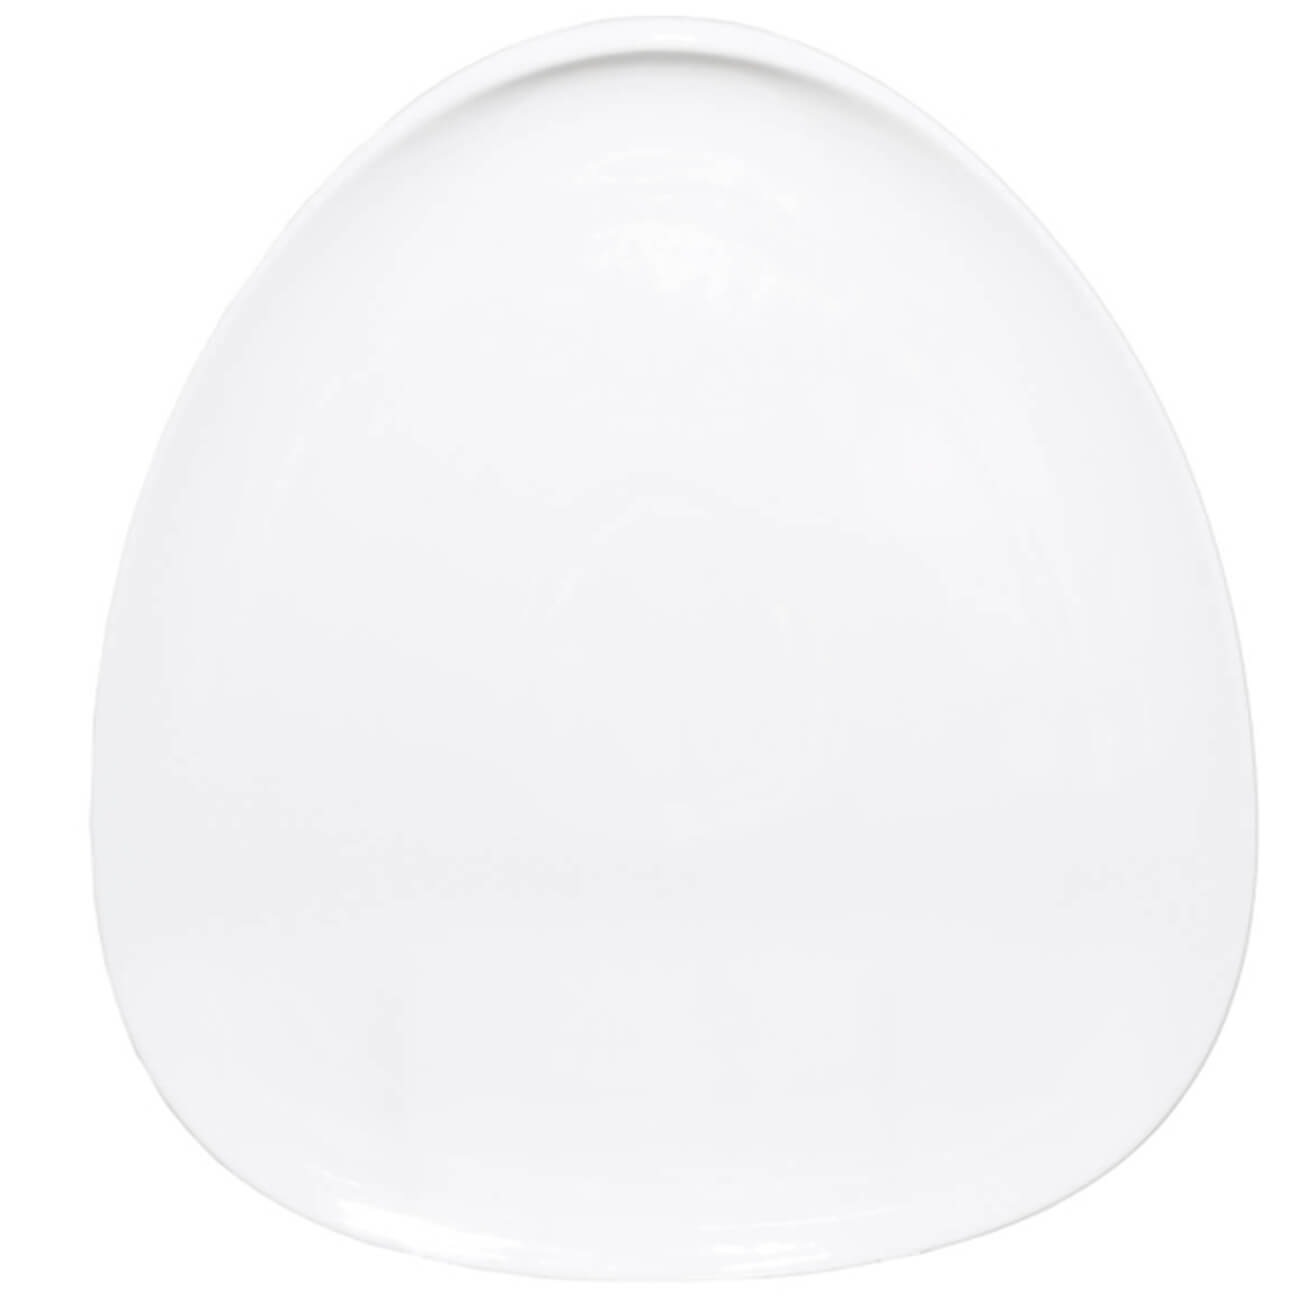 Тарелка обеденная, 27х25 см, фарфор P, белая, Synergy тарелка обеденная bronco meadow 29x23 см мятный арт 474 116